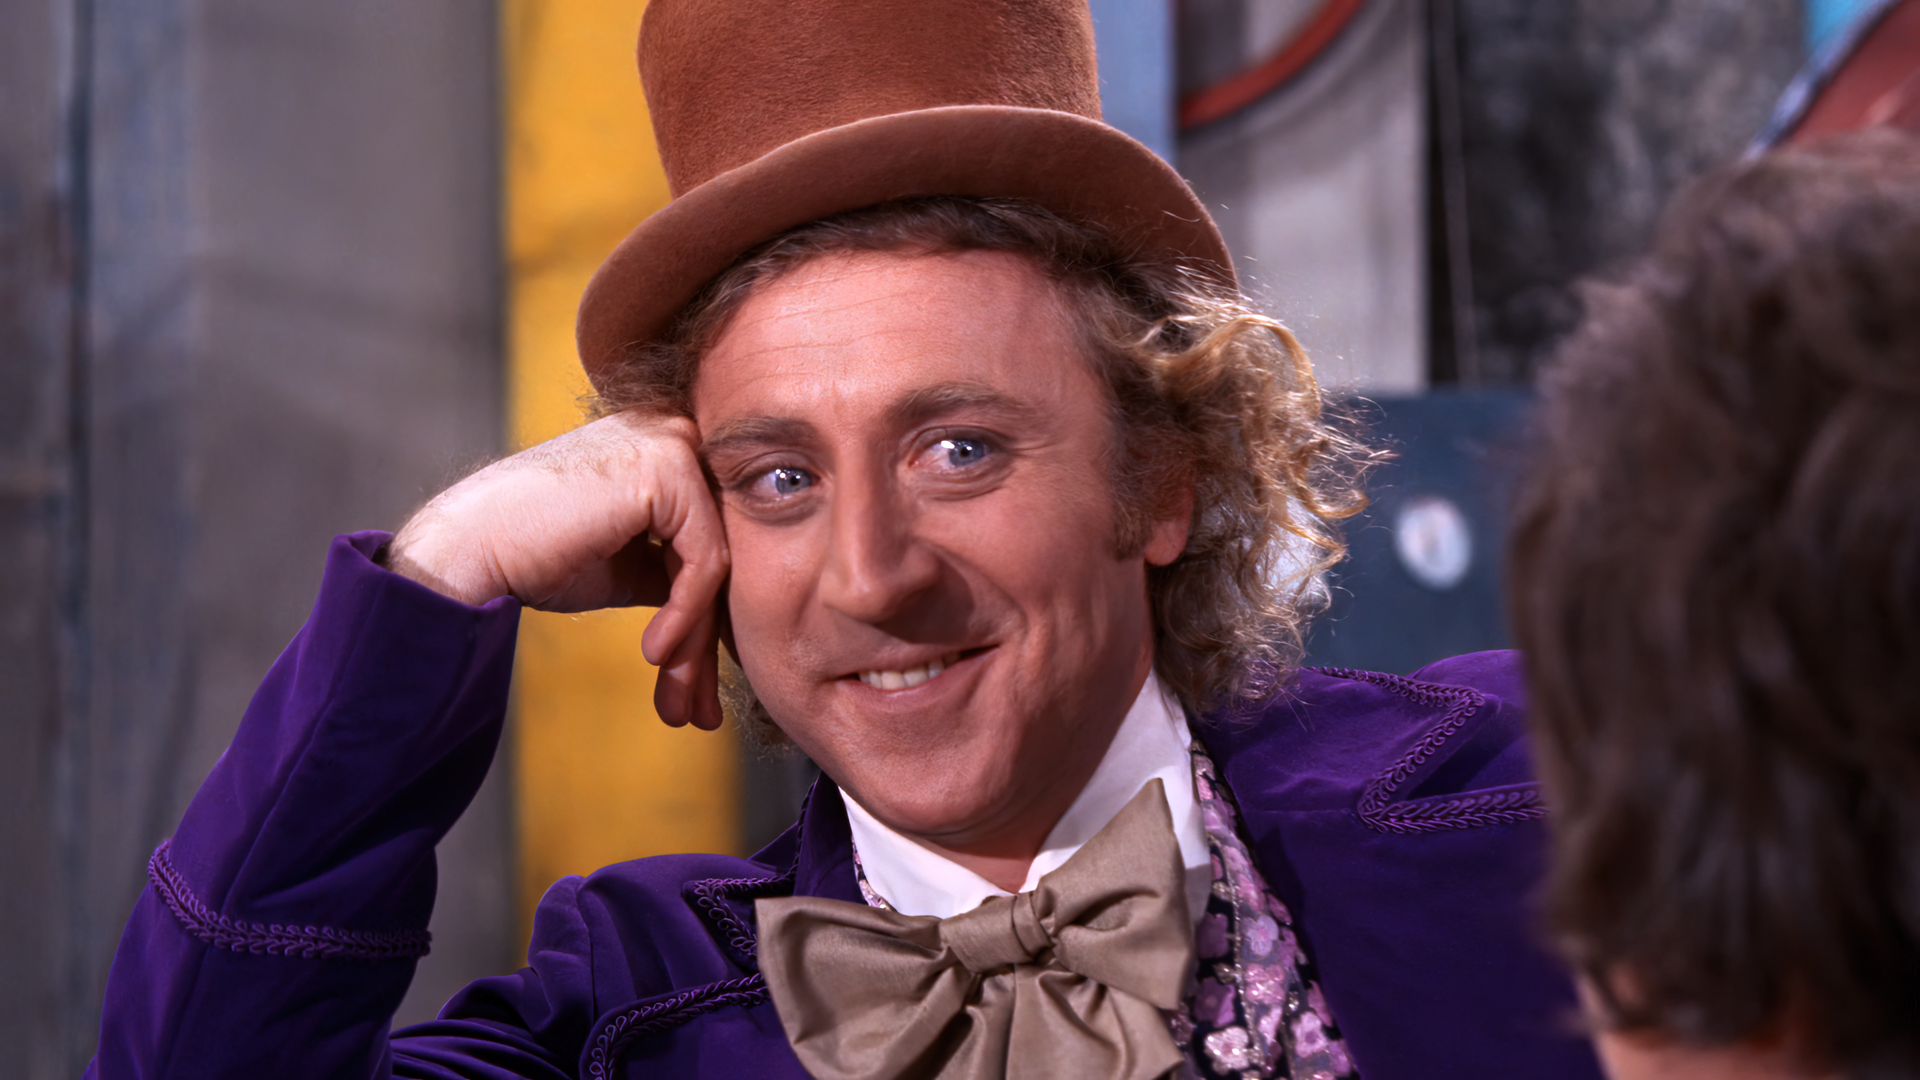 People 1920x1080 Willy Wonka & the Chocolate Factory movies film stills Willy Wonka Gene Wilder actor men hat memes